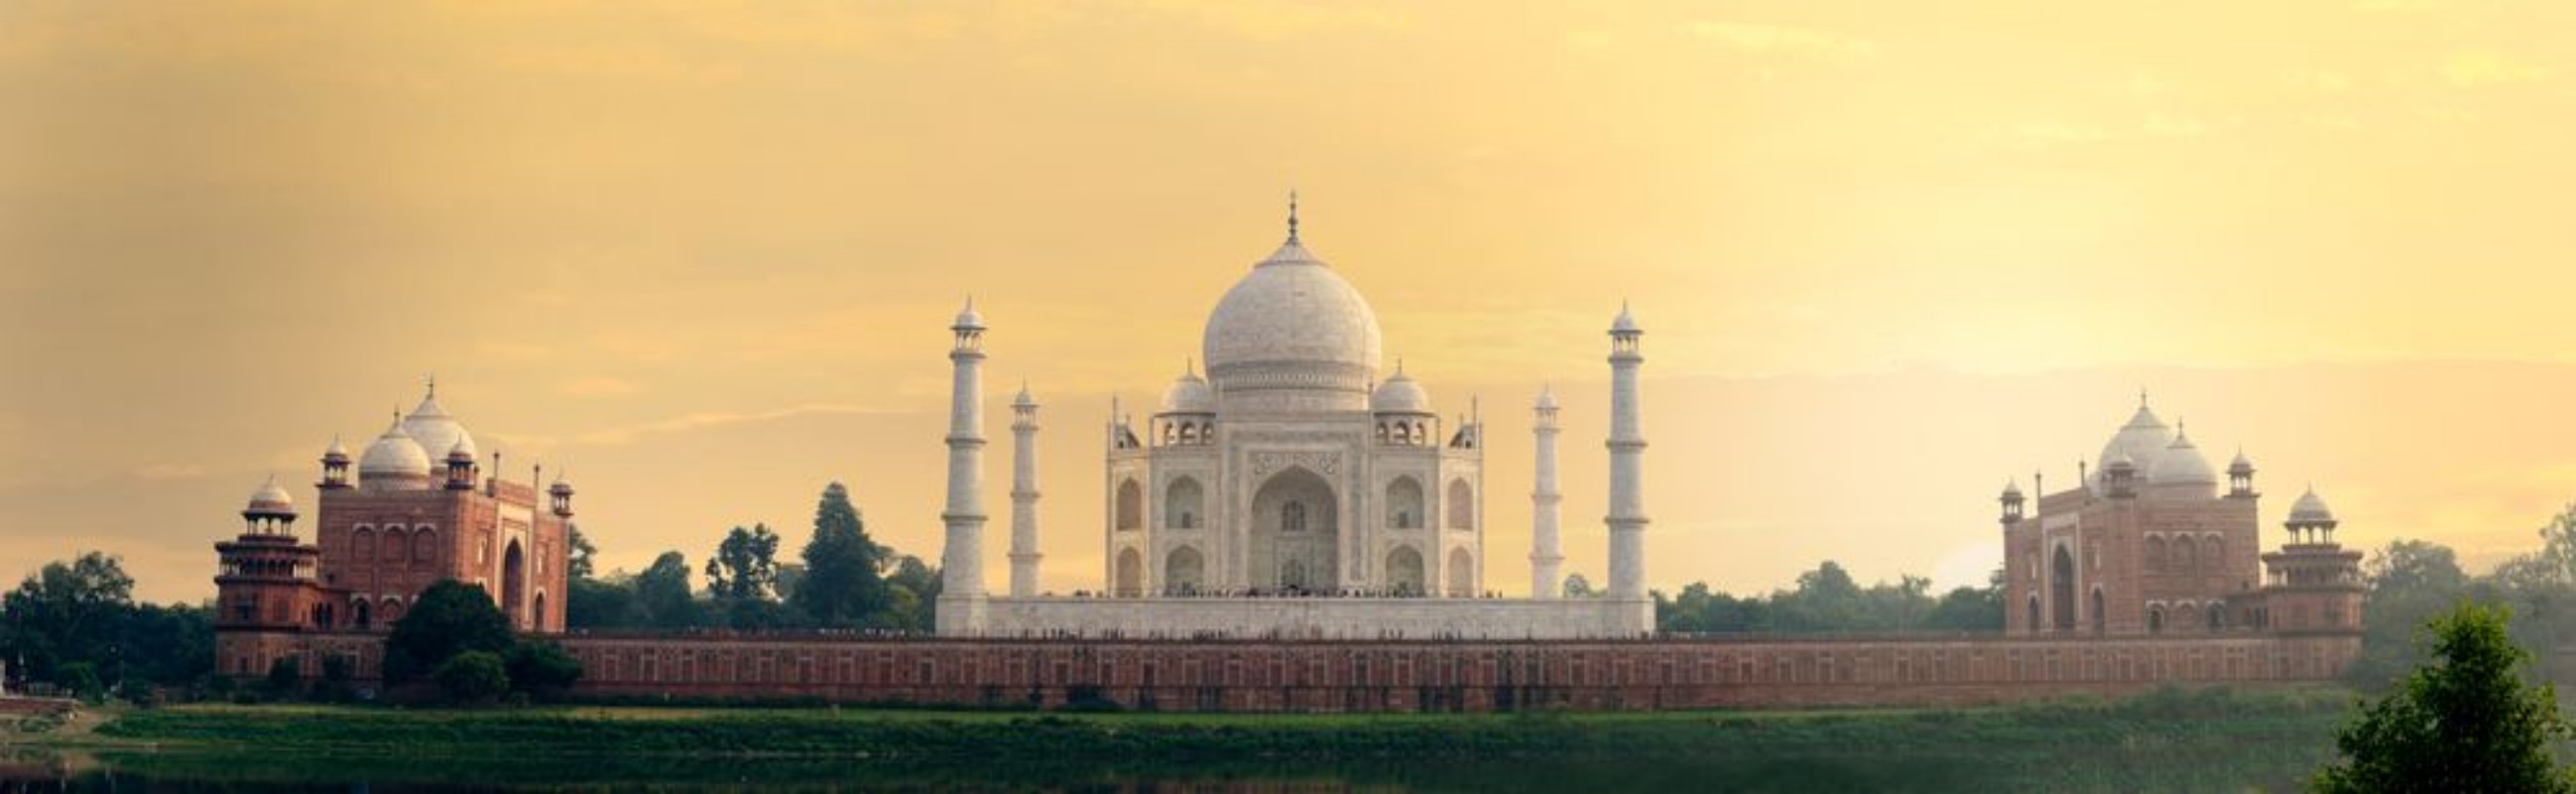 Image de Taj Mahal mausoleum back view from Mehtab Bagh Agra Uttar Pradesh state India